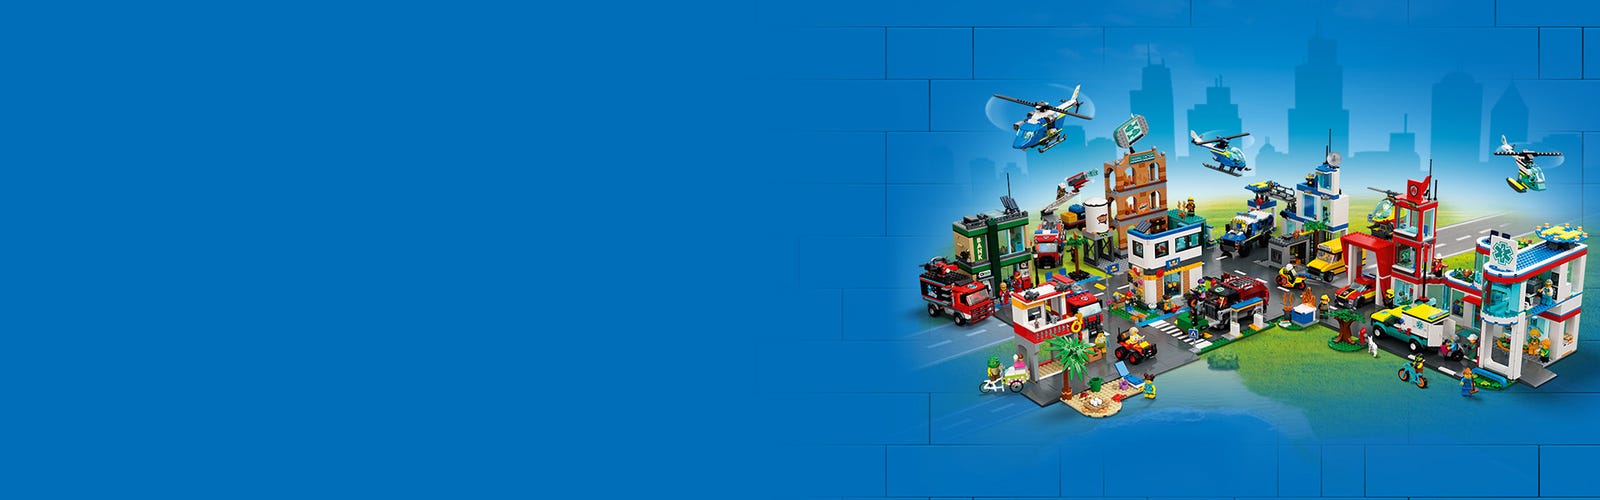 Lego - City Fire Station 60320